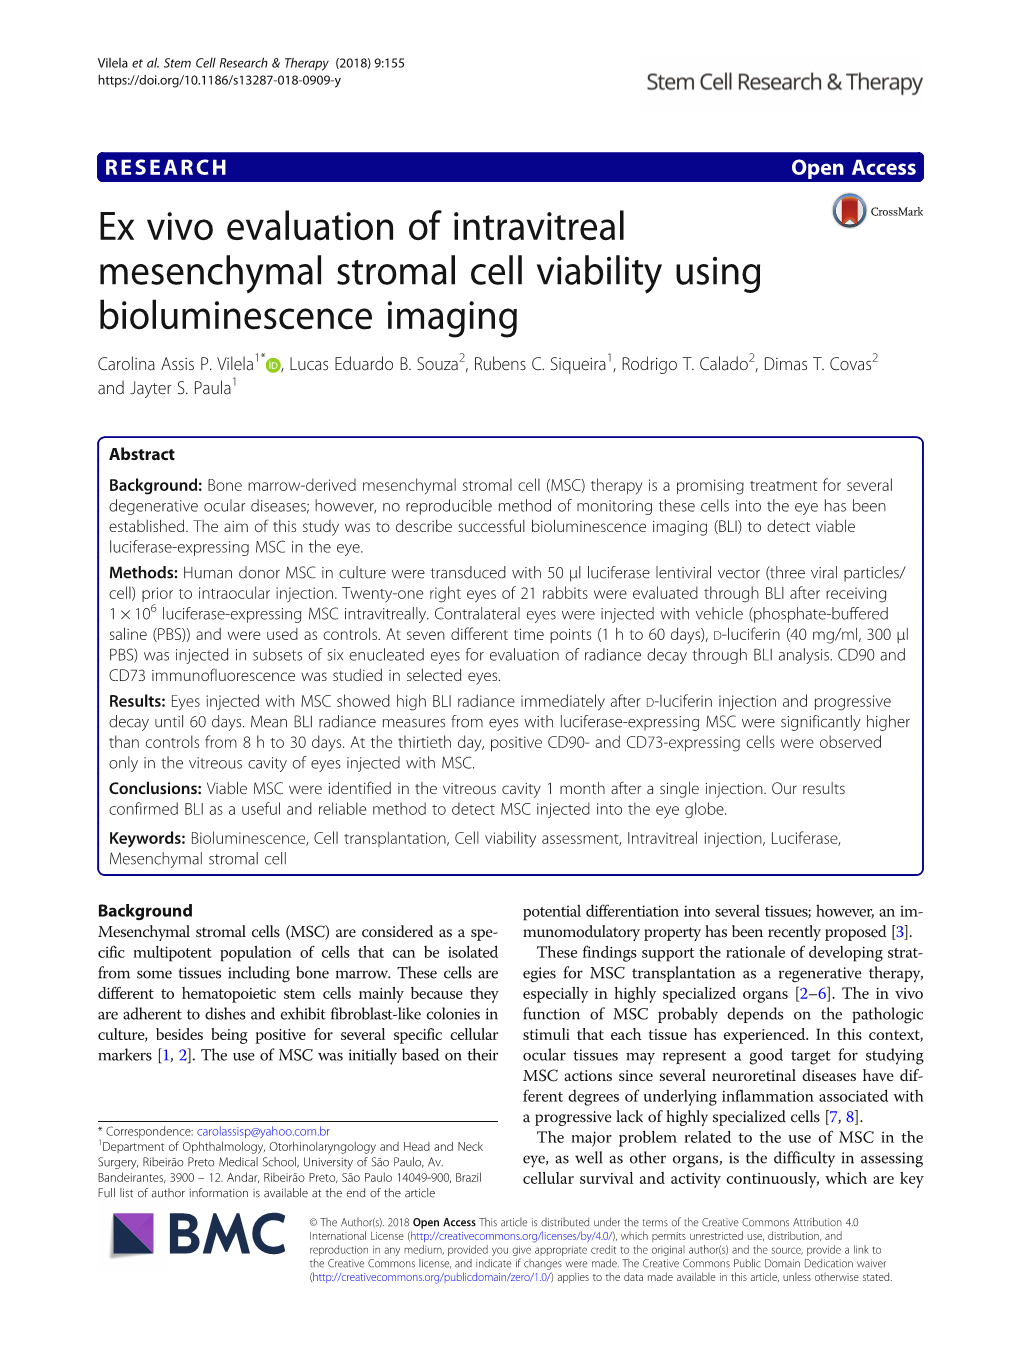 Ex Vivo Evaluation of Intravitreal Mesenchymal Stromal Cell Viability Using Bioluminescence Imaging Carolina Assis P